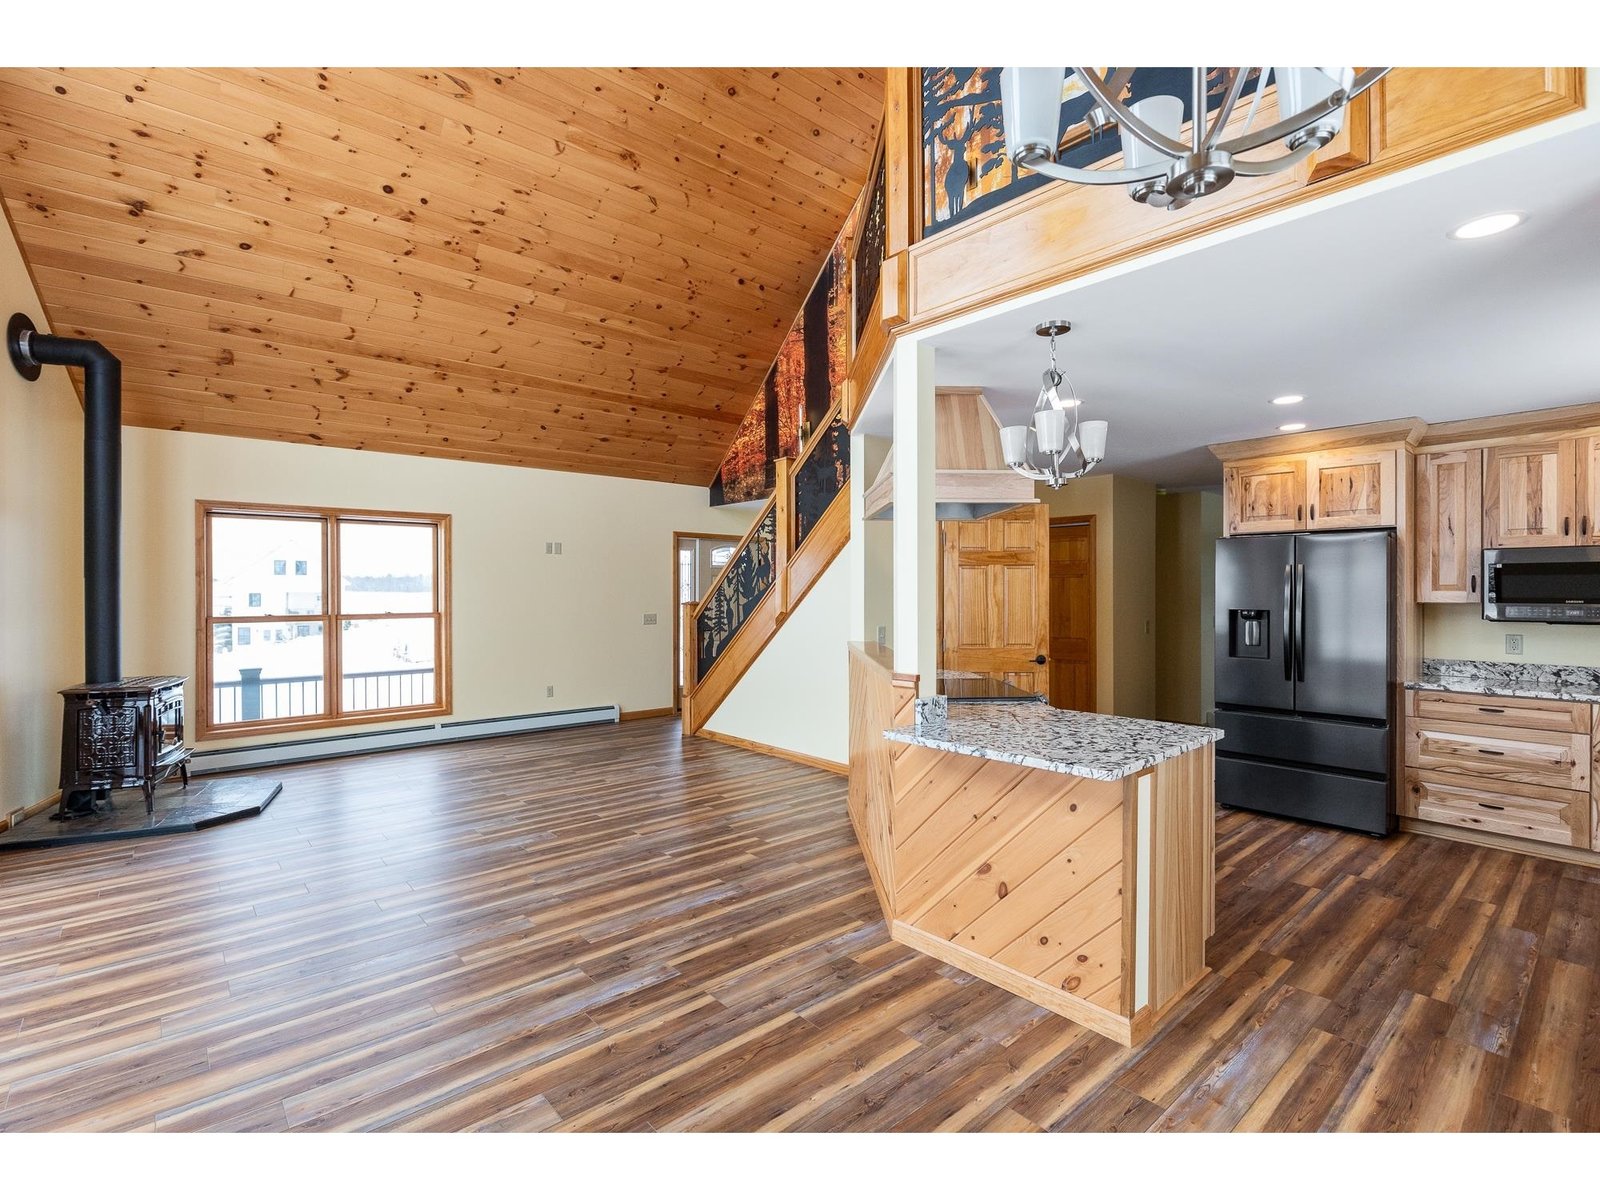 Wide open living space with extensive hardwood flooring